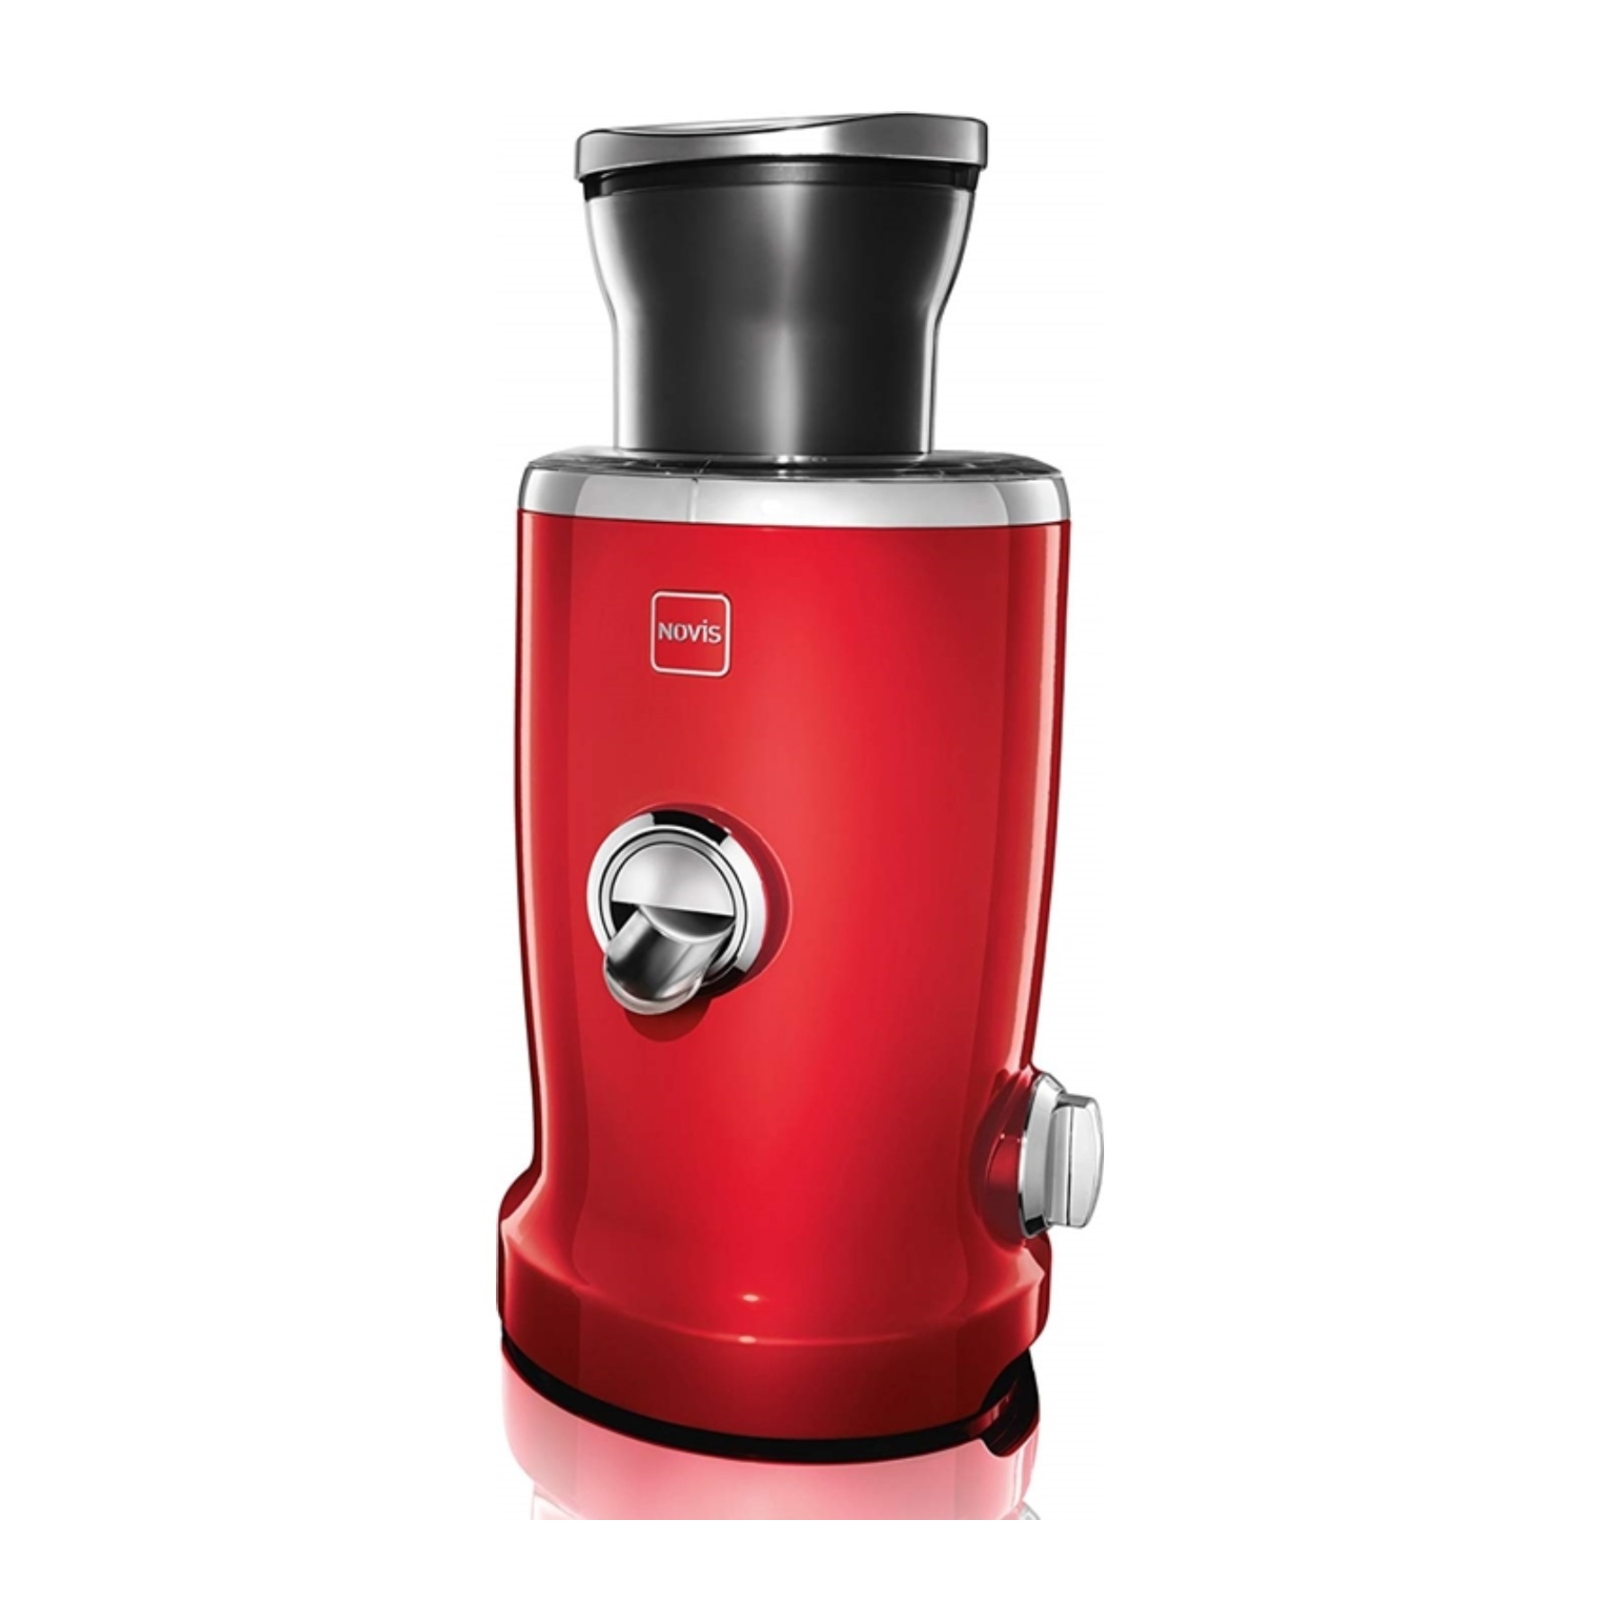 Novis 6511.02.30 Vita Juicer Citrus Press Juice Extractor 240W Autospeed – Red BRAND NEW